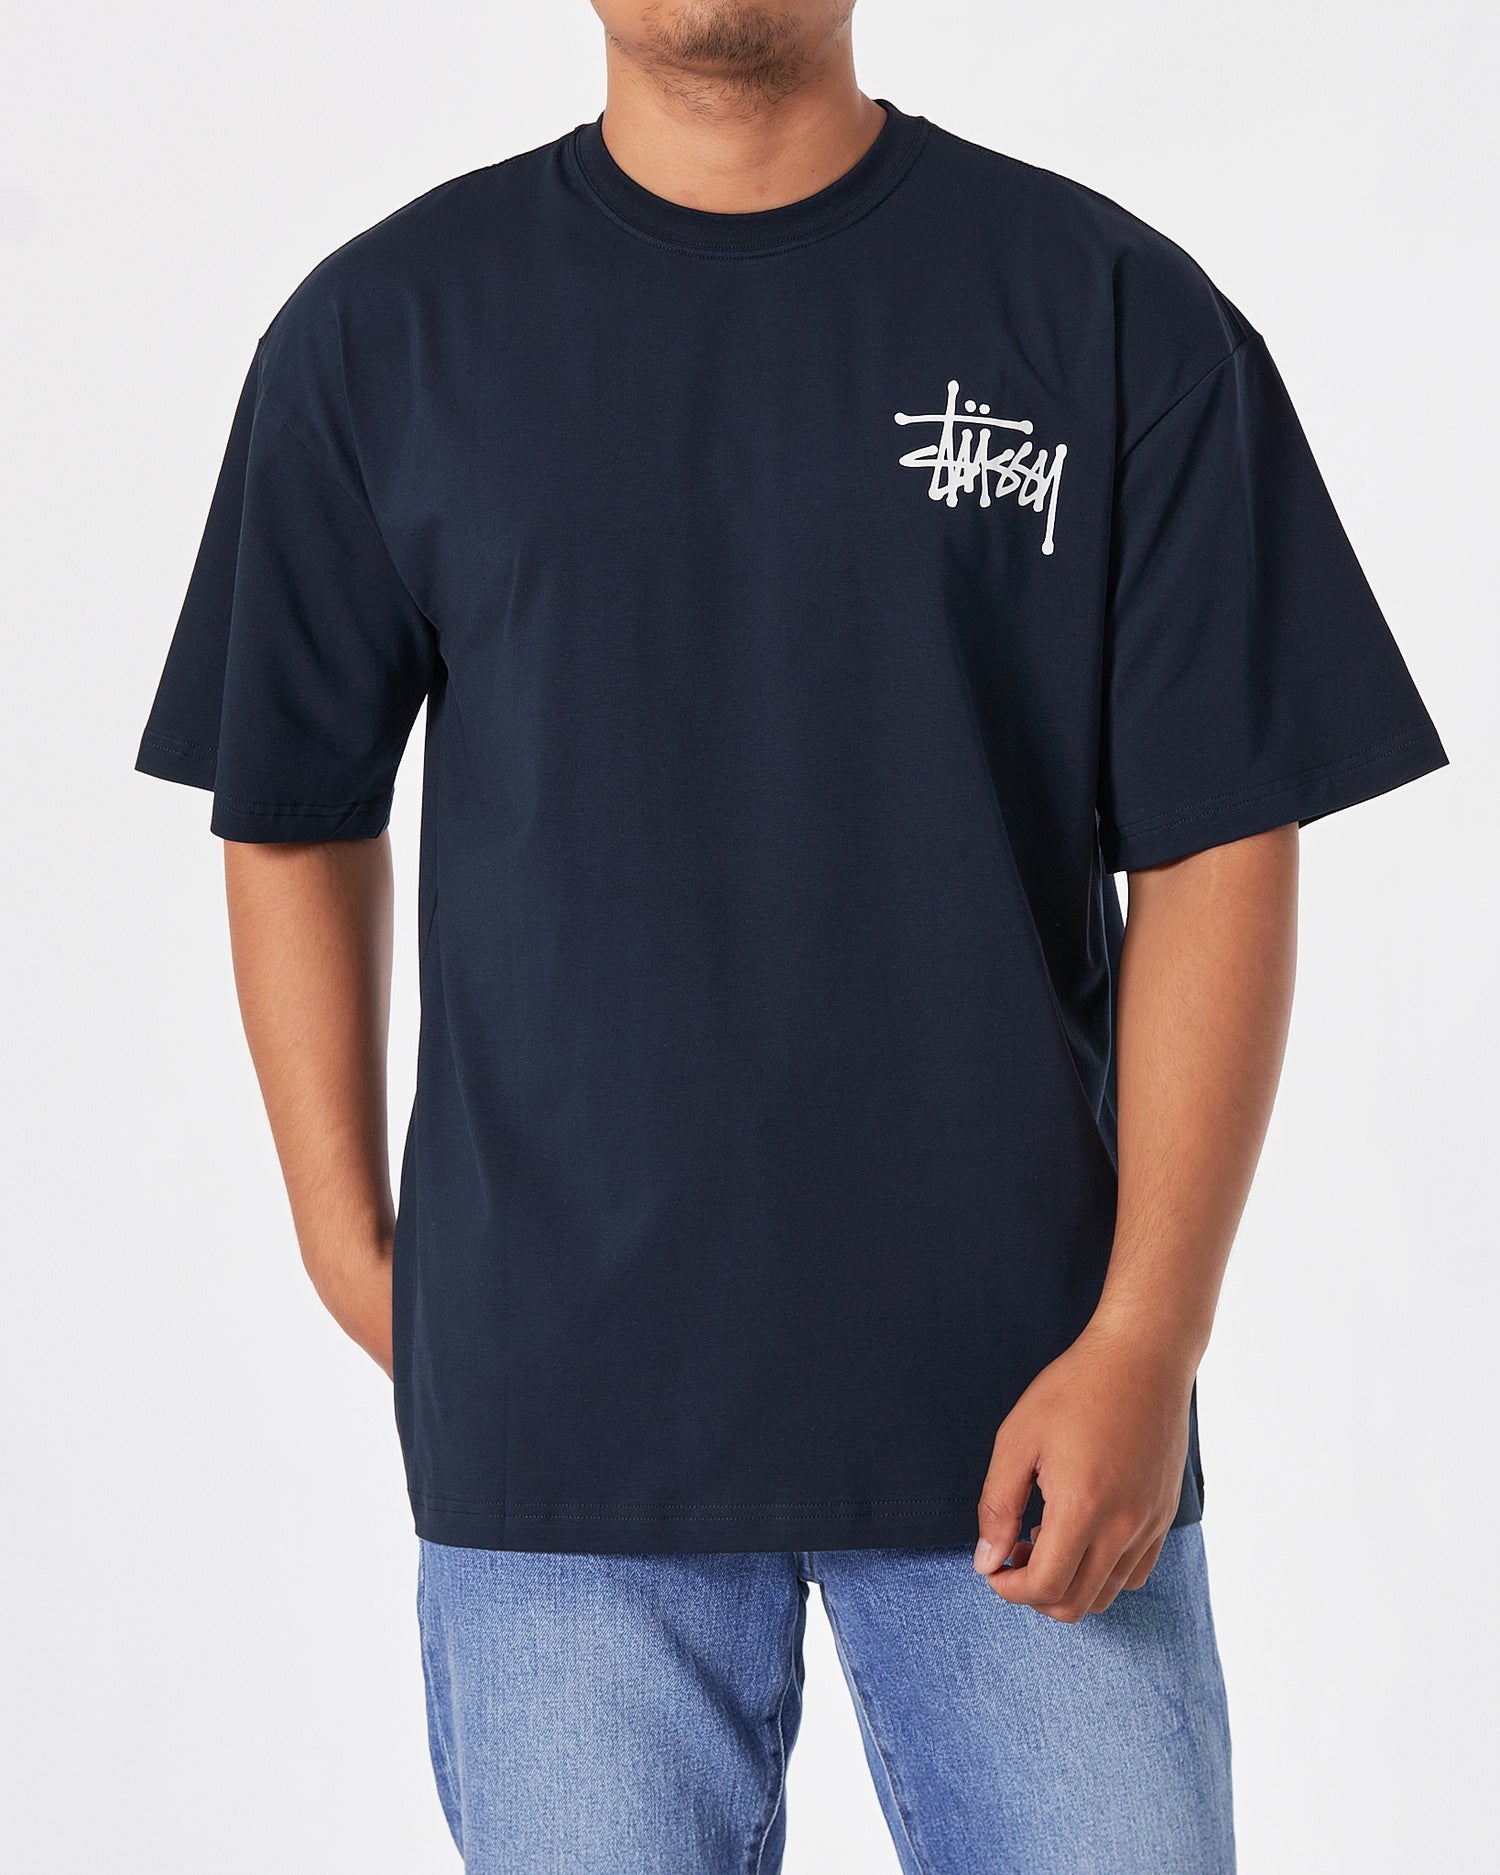 STU Front Back Logo Printed Men Blue T-Shirt 20.90